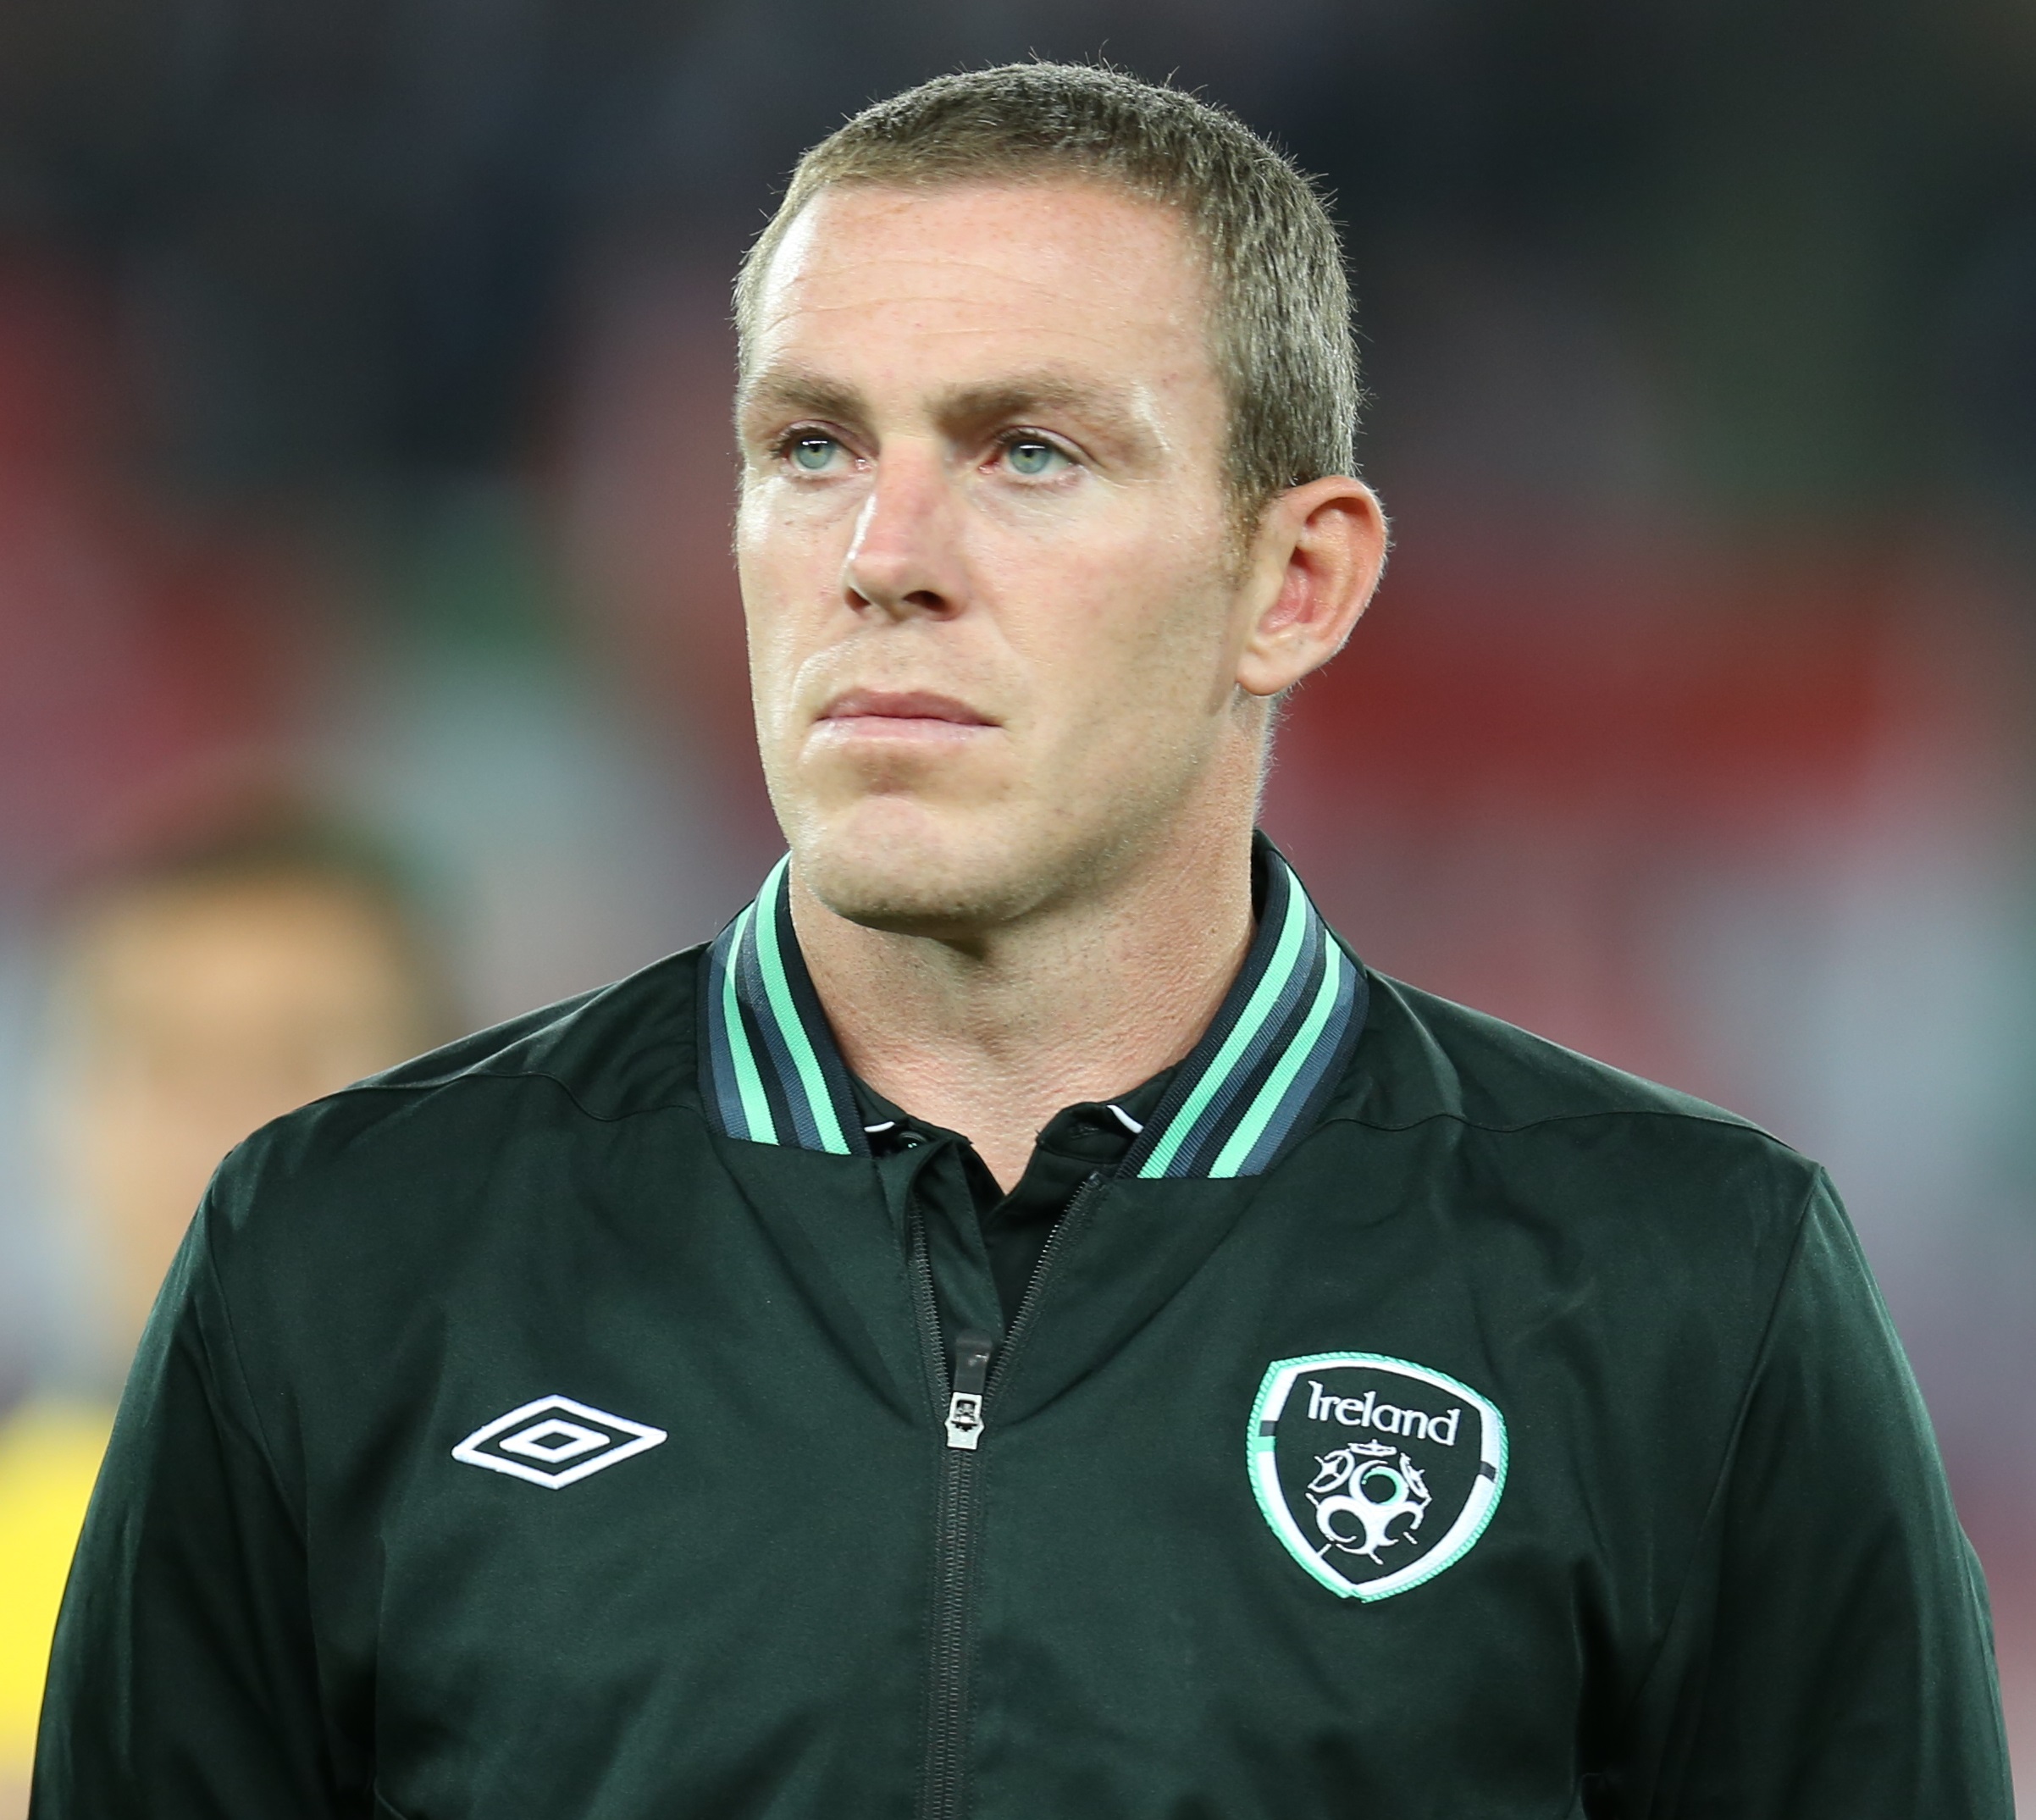 Profile picture of footballer Richard Dunne in an Ireland international jersey.